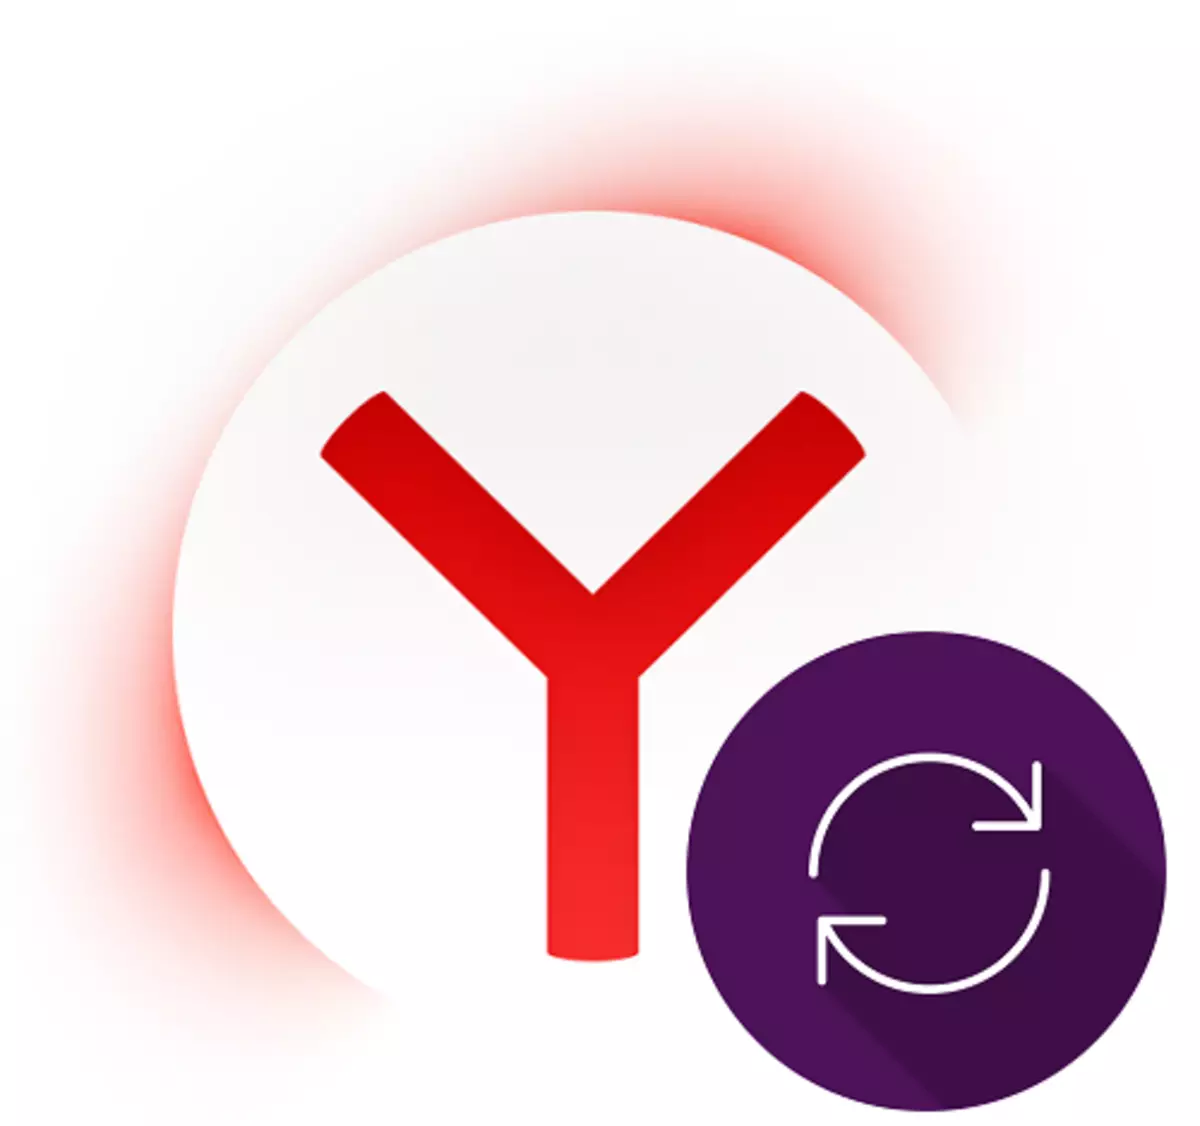 yandex.bauser ၏ထပ်တူပြုခြင်း